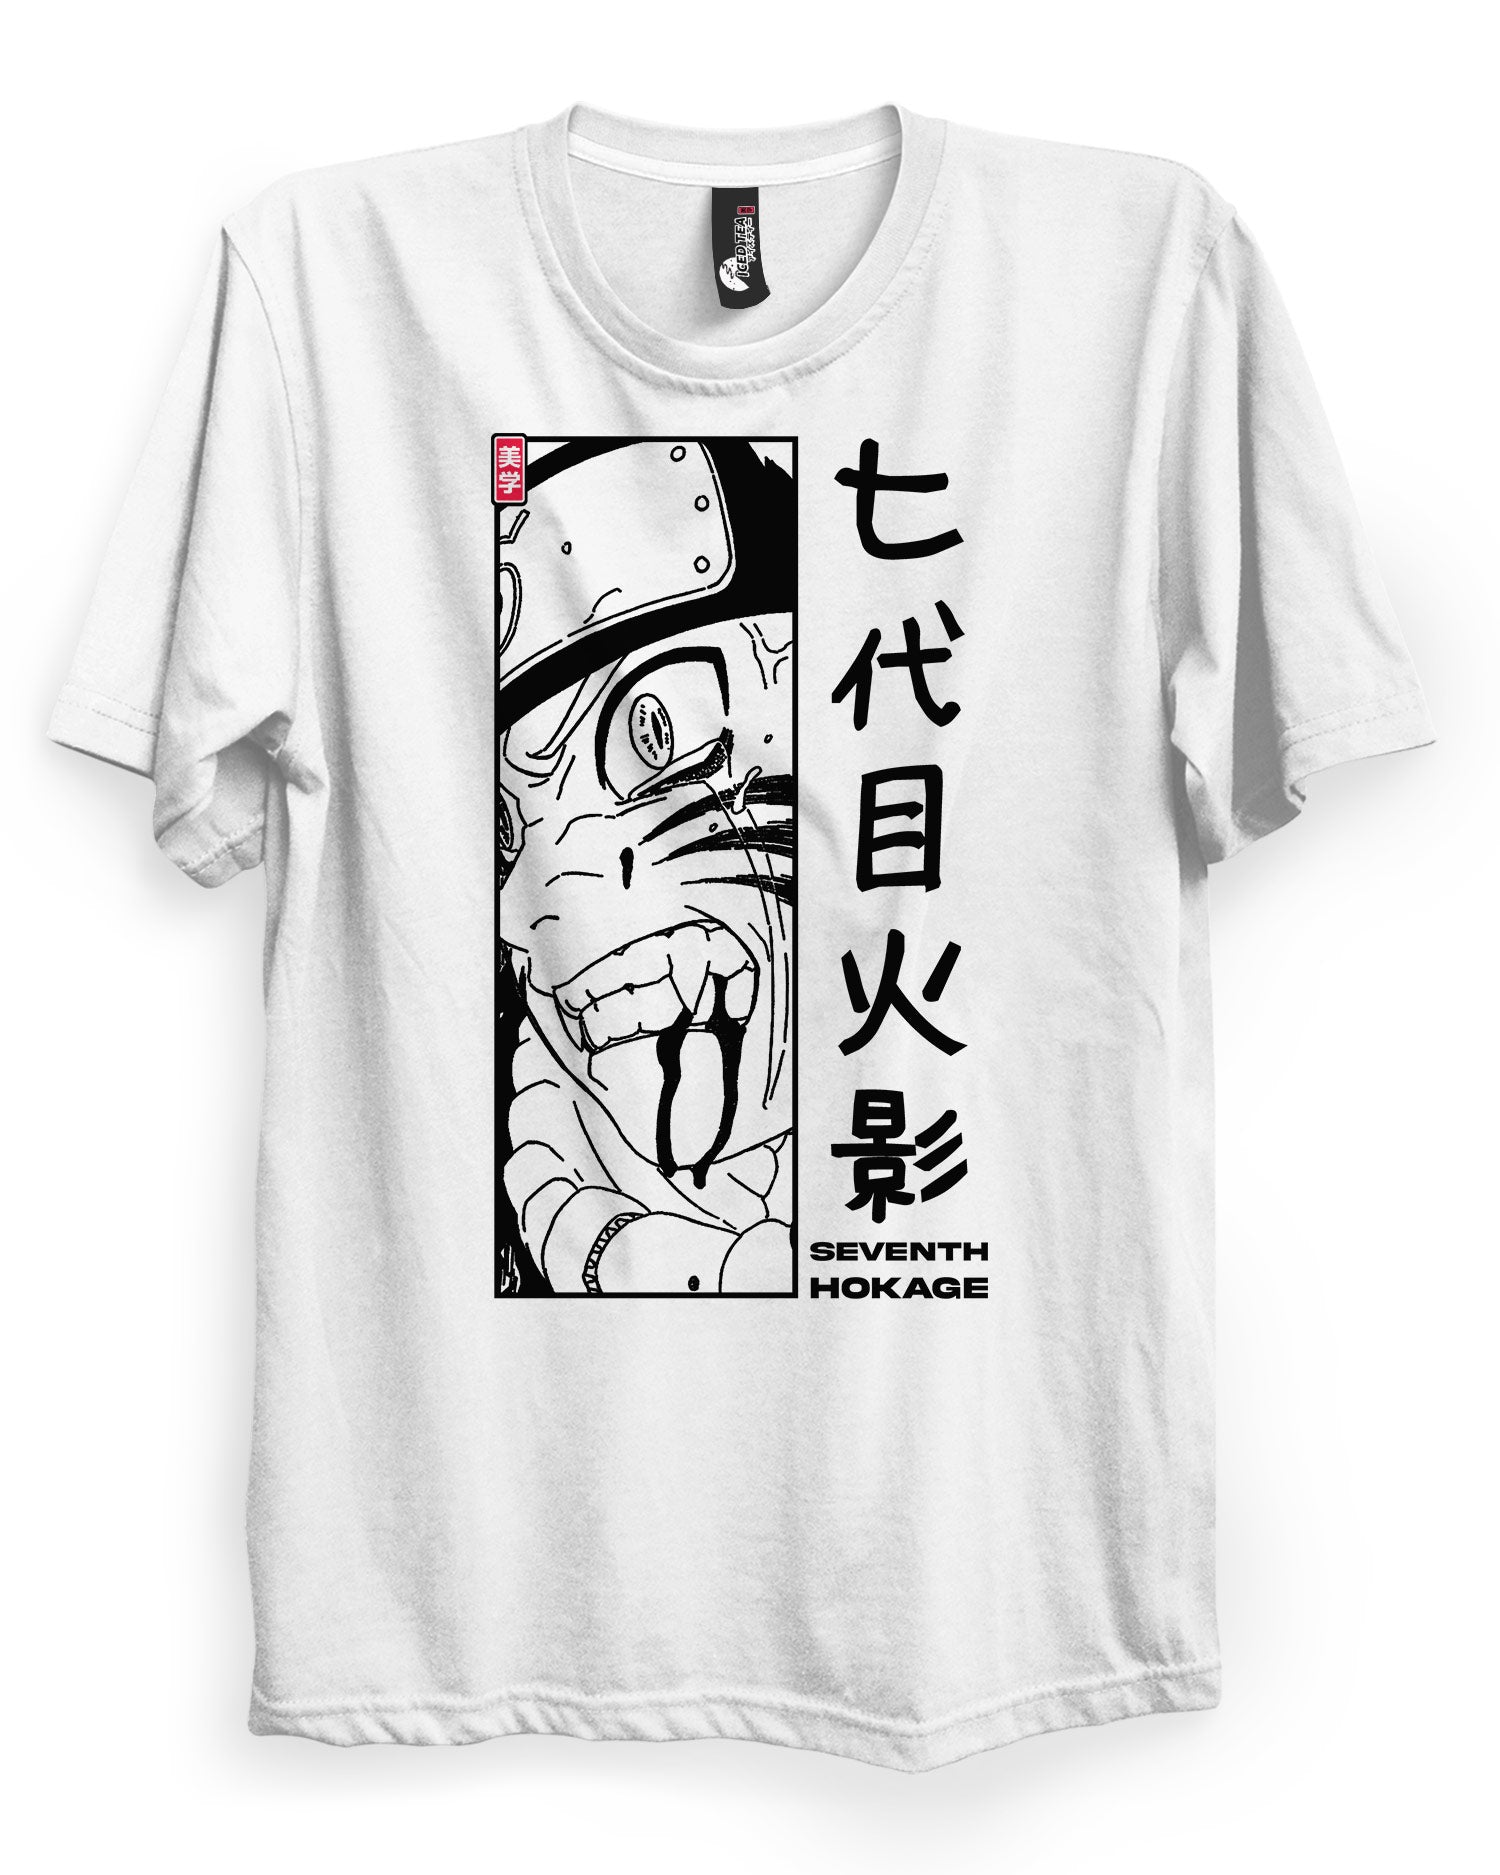 NARUTO (7th HOKAGE) - T-Shirt